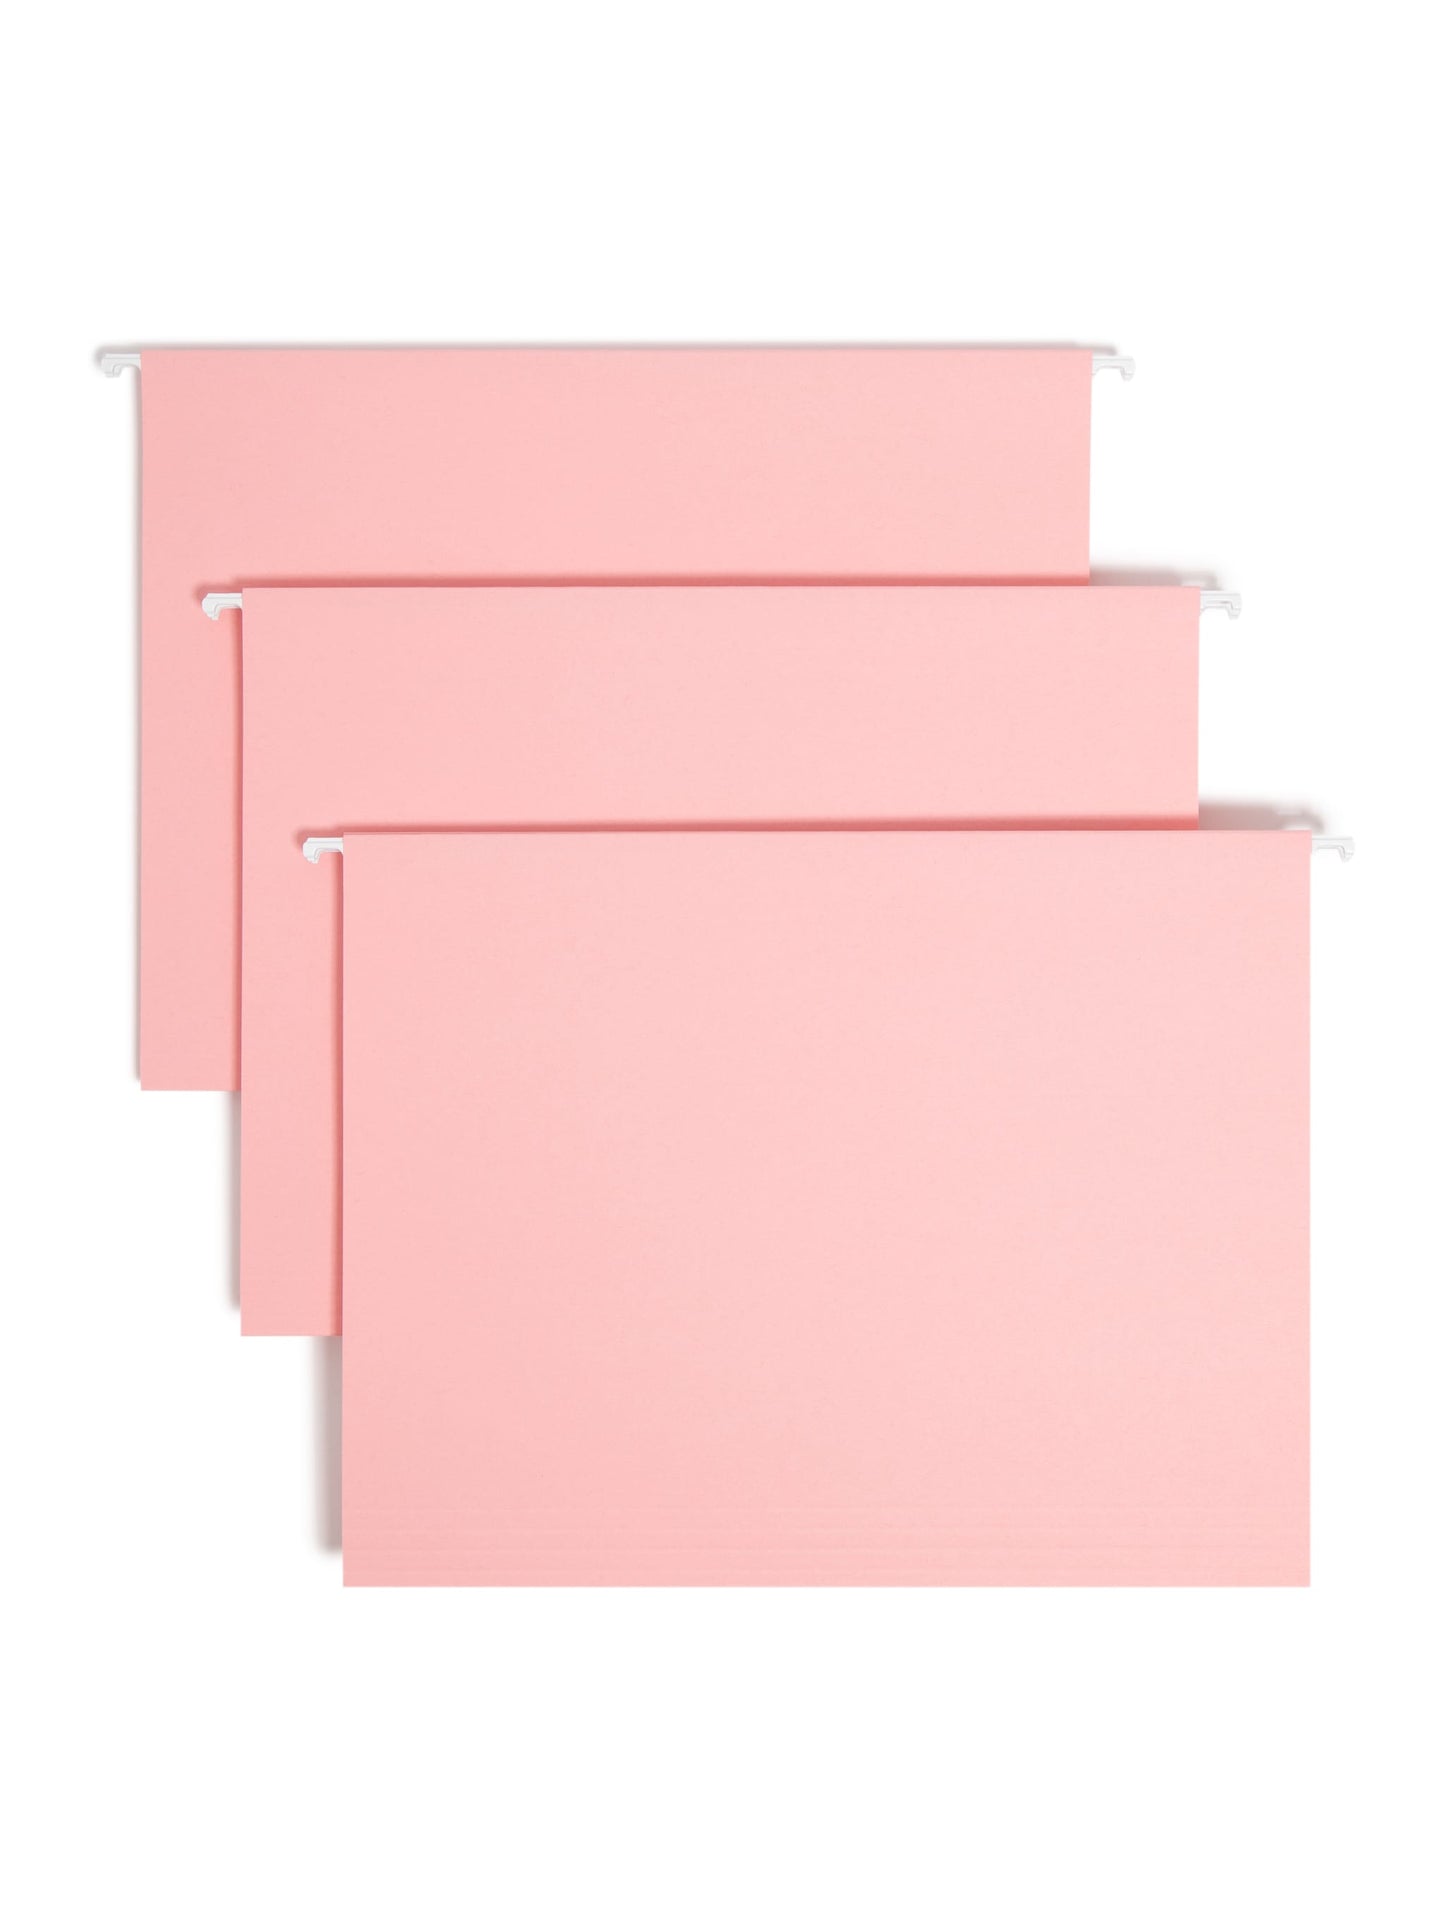 Standard Hanging File Folders with 1/5-Cut Tabs, Pink Color, Letter Size, Set of 25, 086486640664